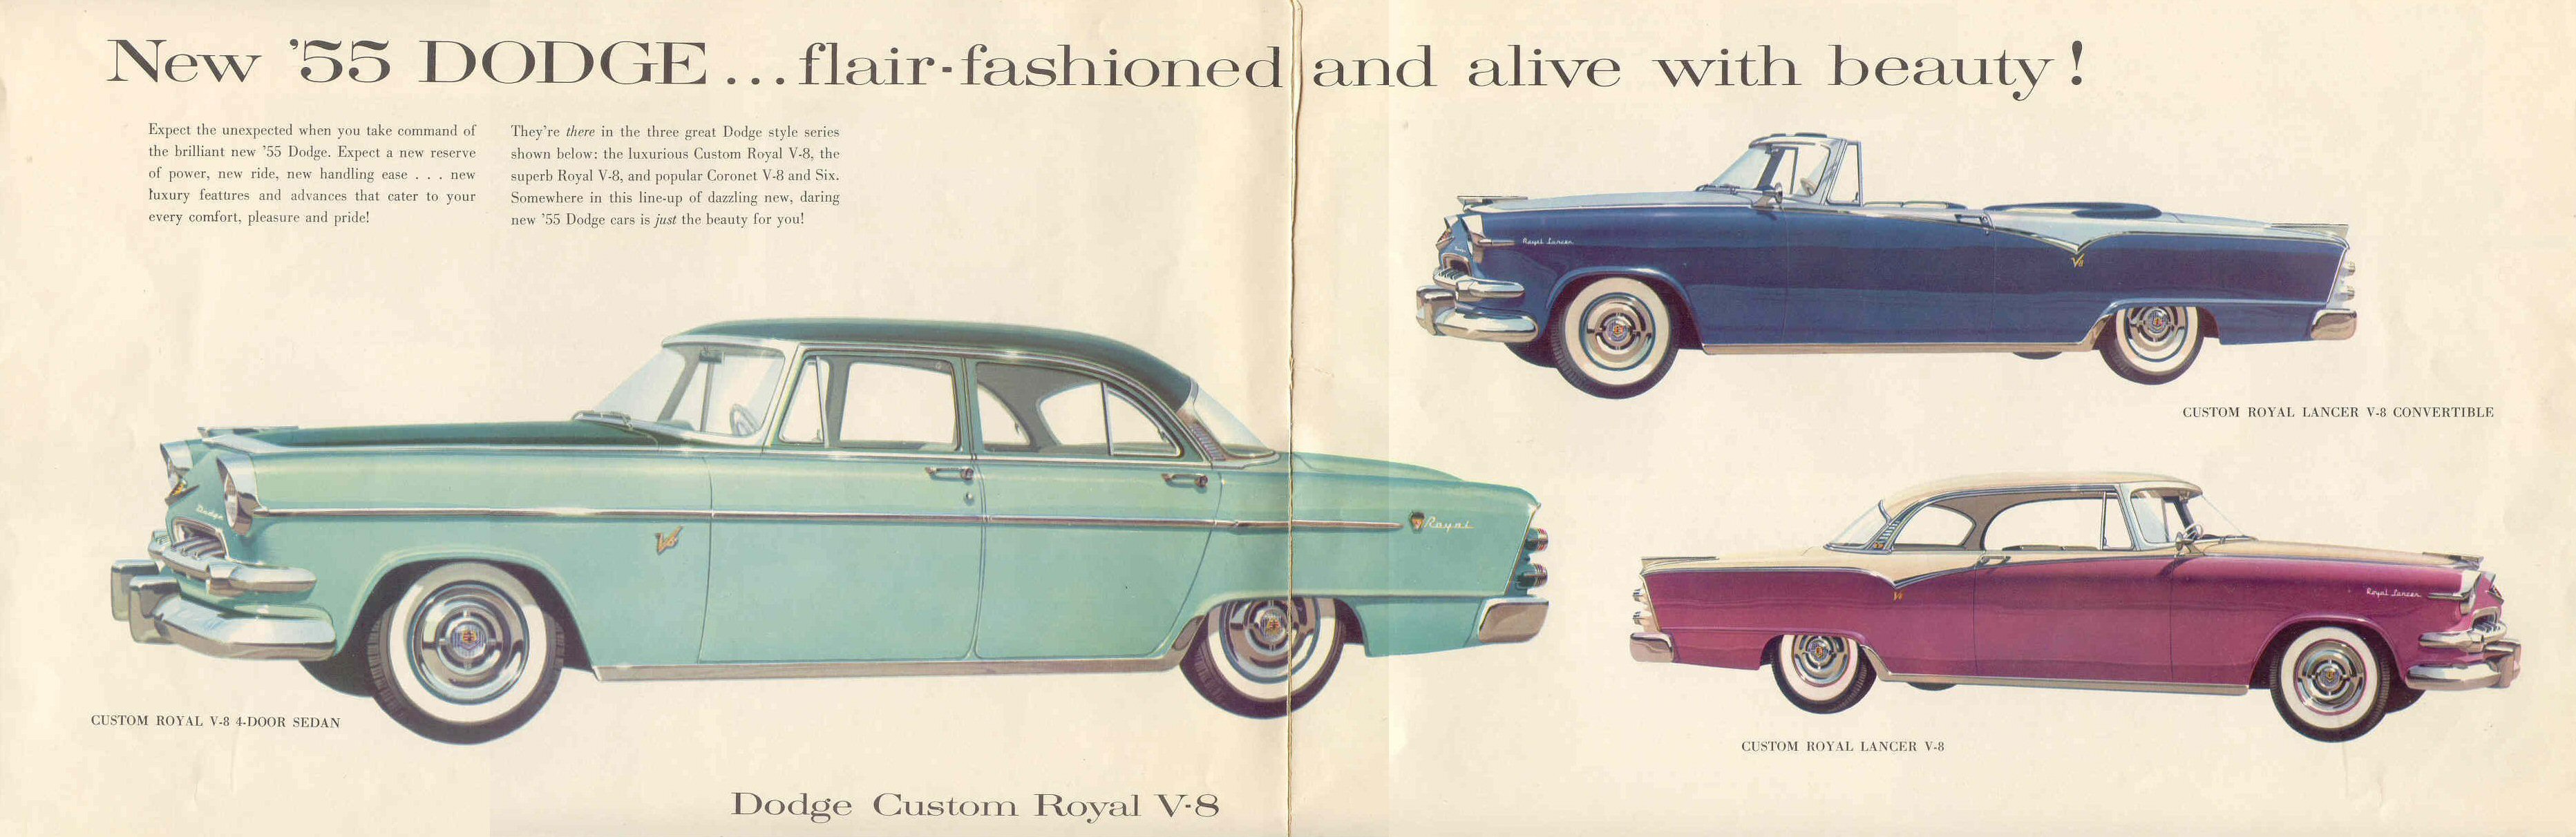 1955 Dodge Car Brochure Page 1